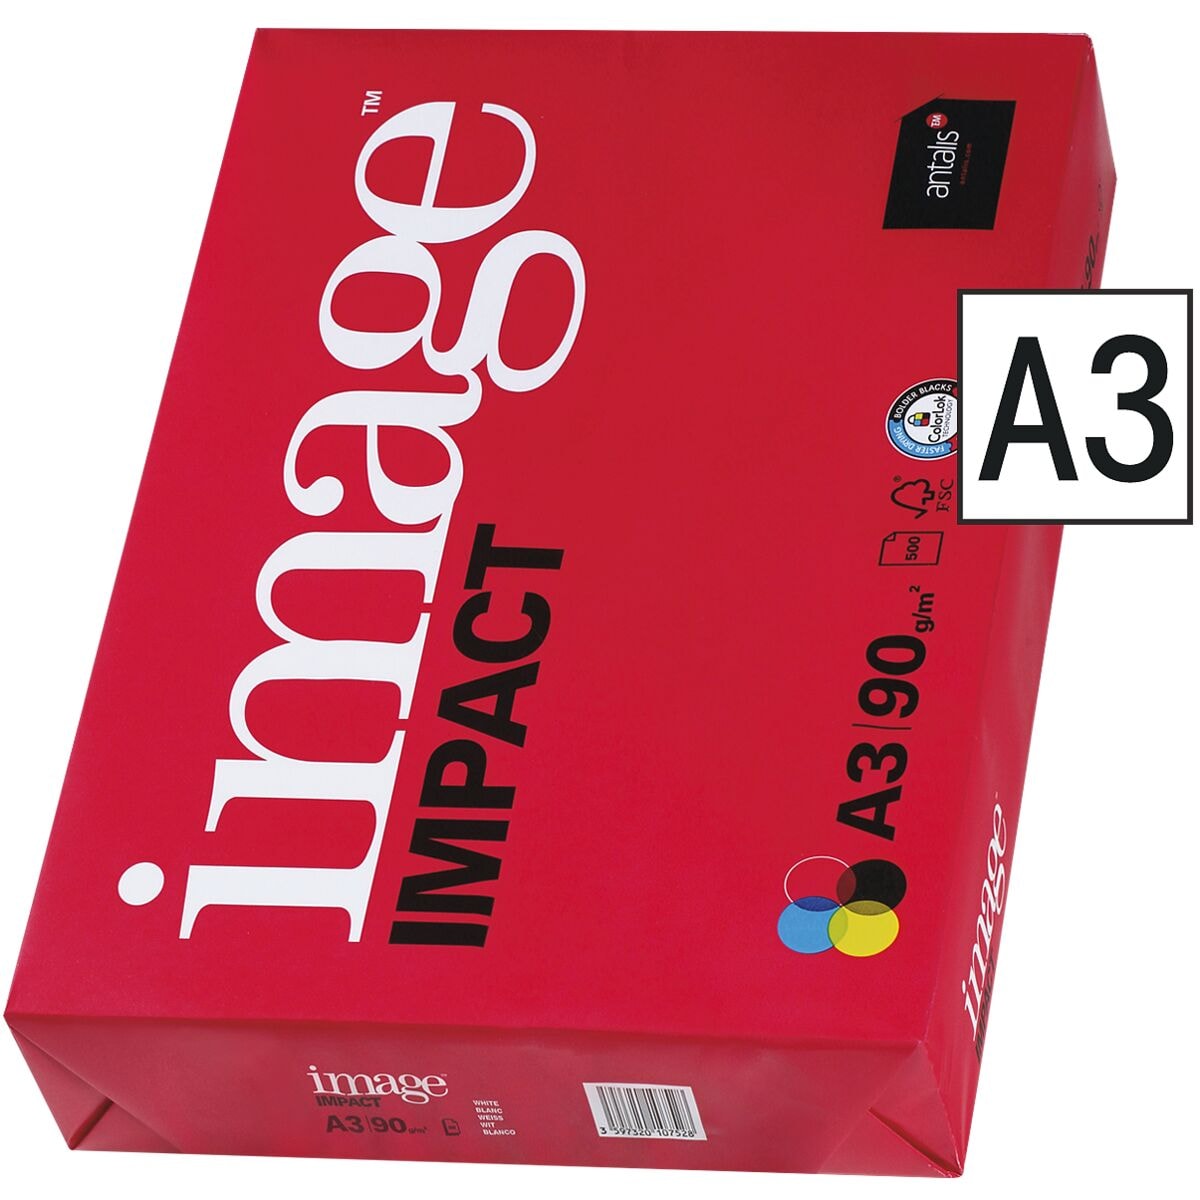 Multifunktionspapier A3 antalis image IMPACT - 500 Blatt gesamt